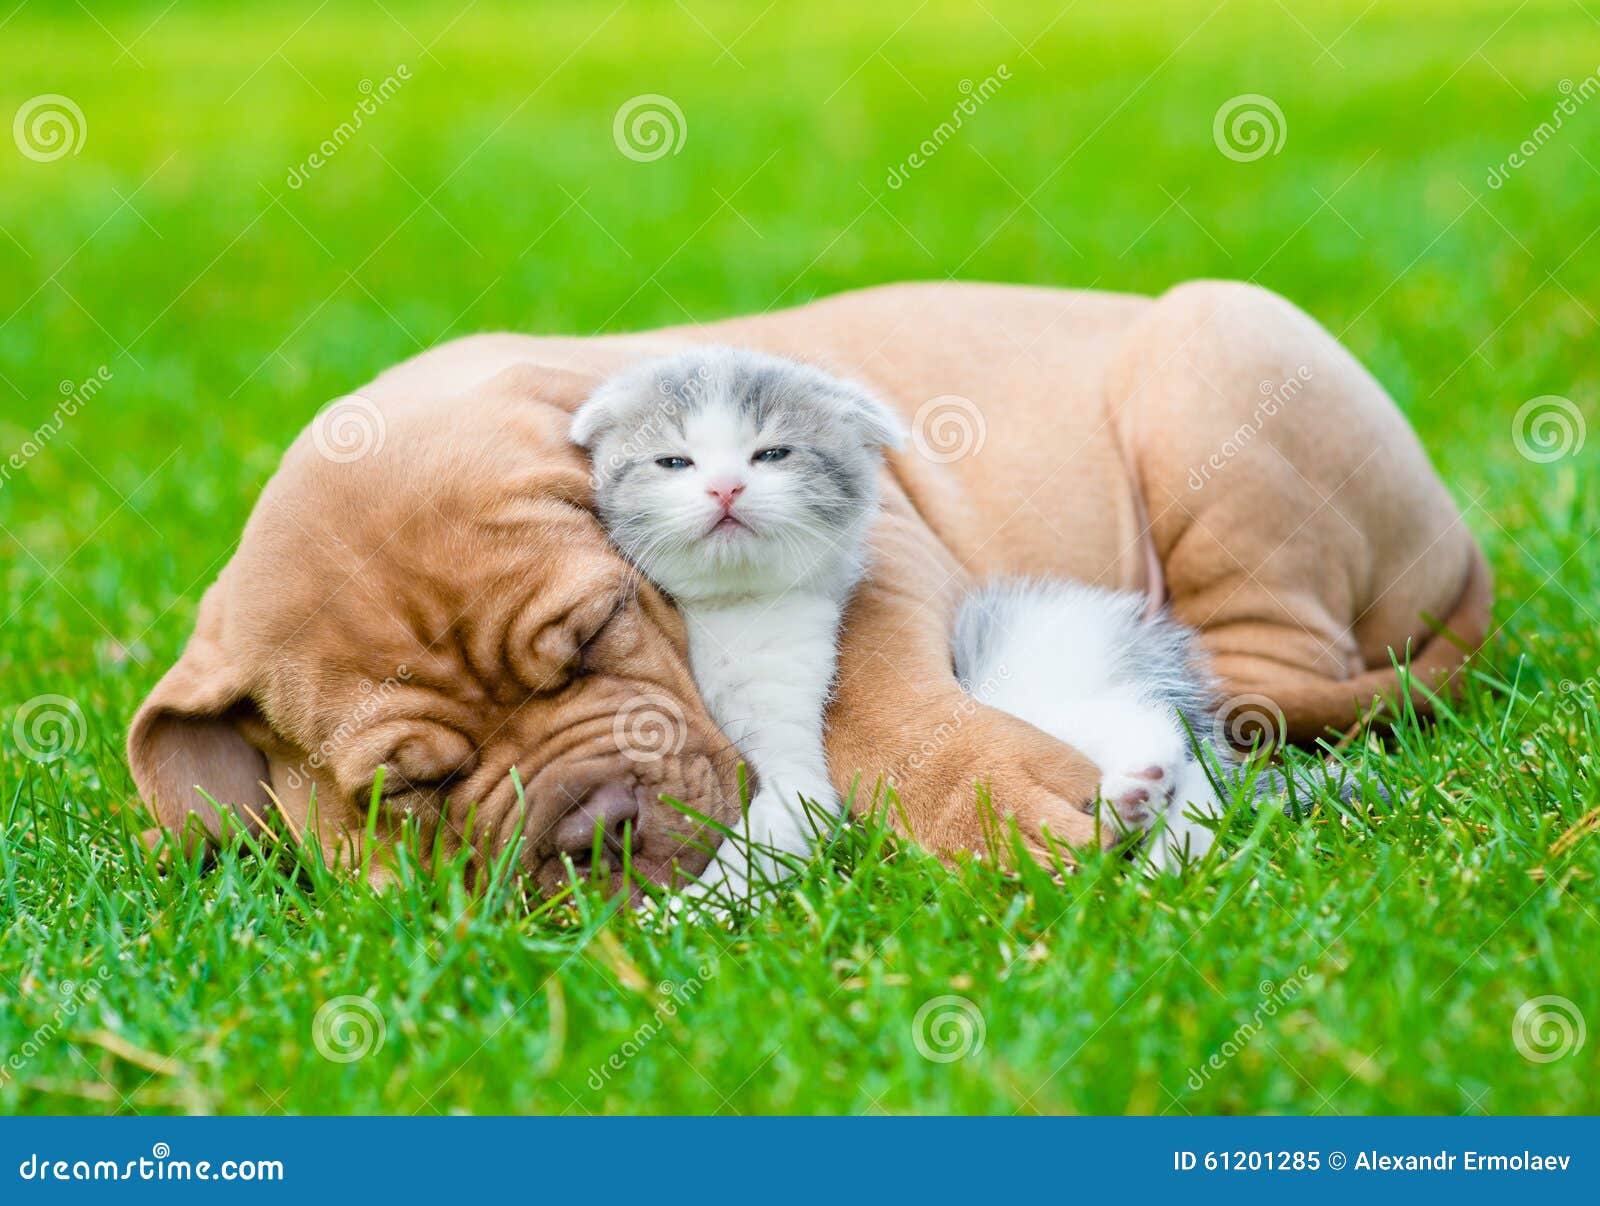 sleeping bordeaux puppy dog hugs newborn kitten on green grass